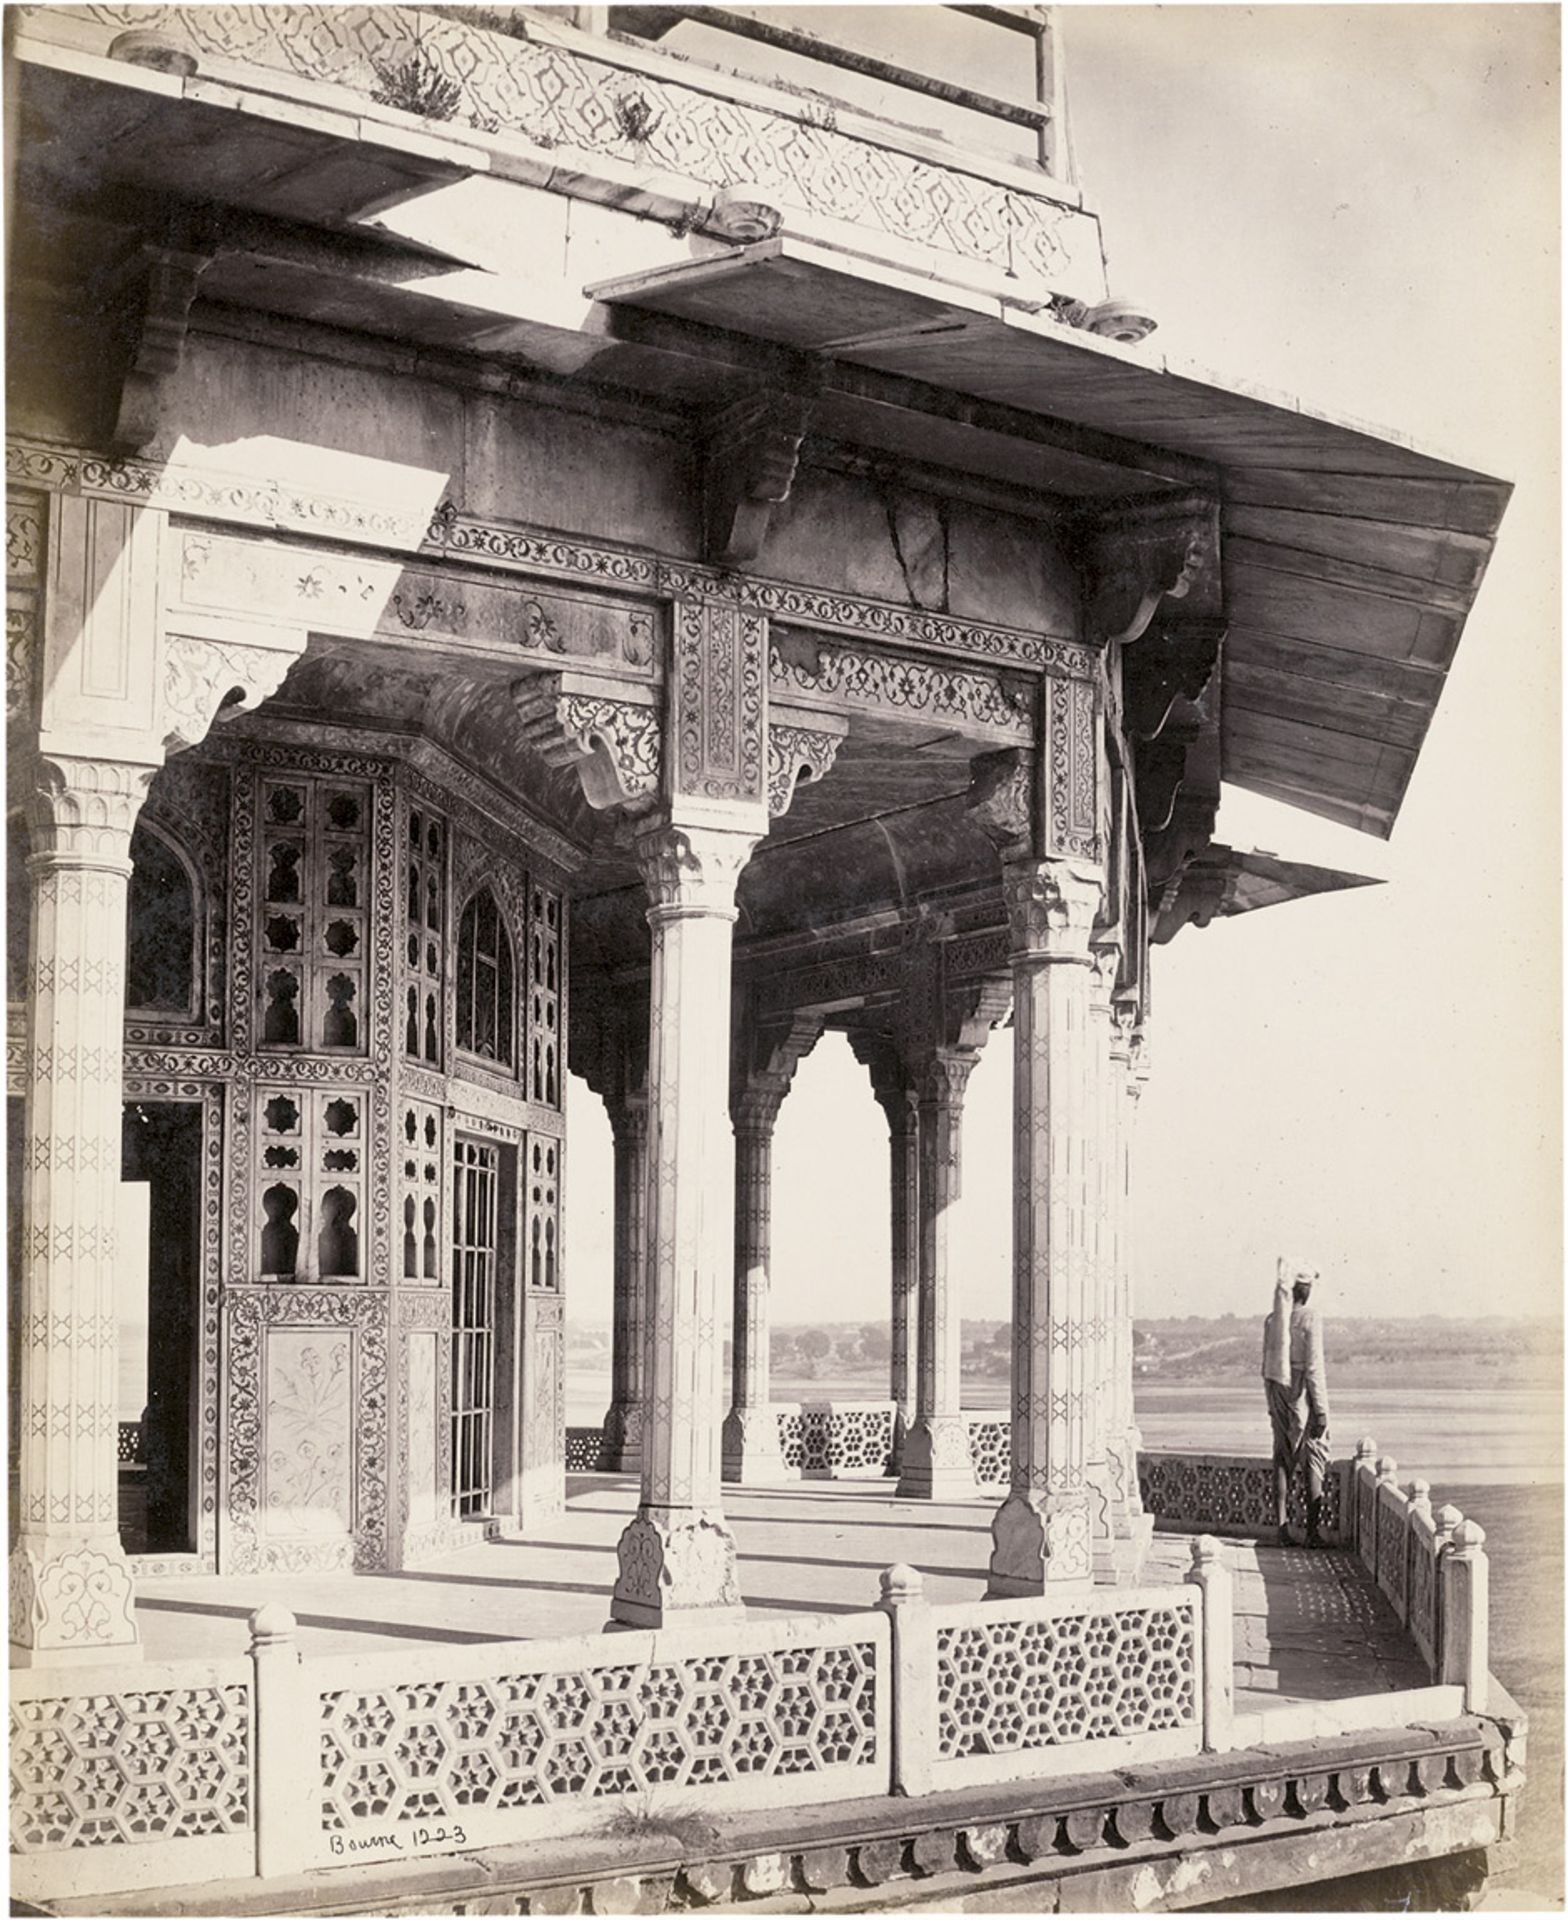 India: Views of IndiaPhotographer: Samuel Bourne. Views of India. 1860s. 5 albumen prints. 29,5 x 24